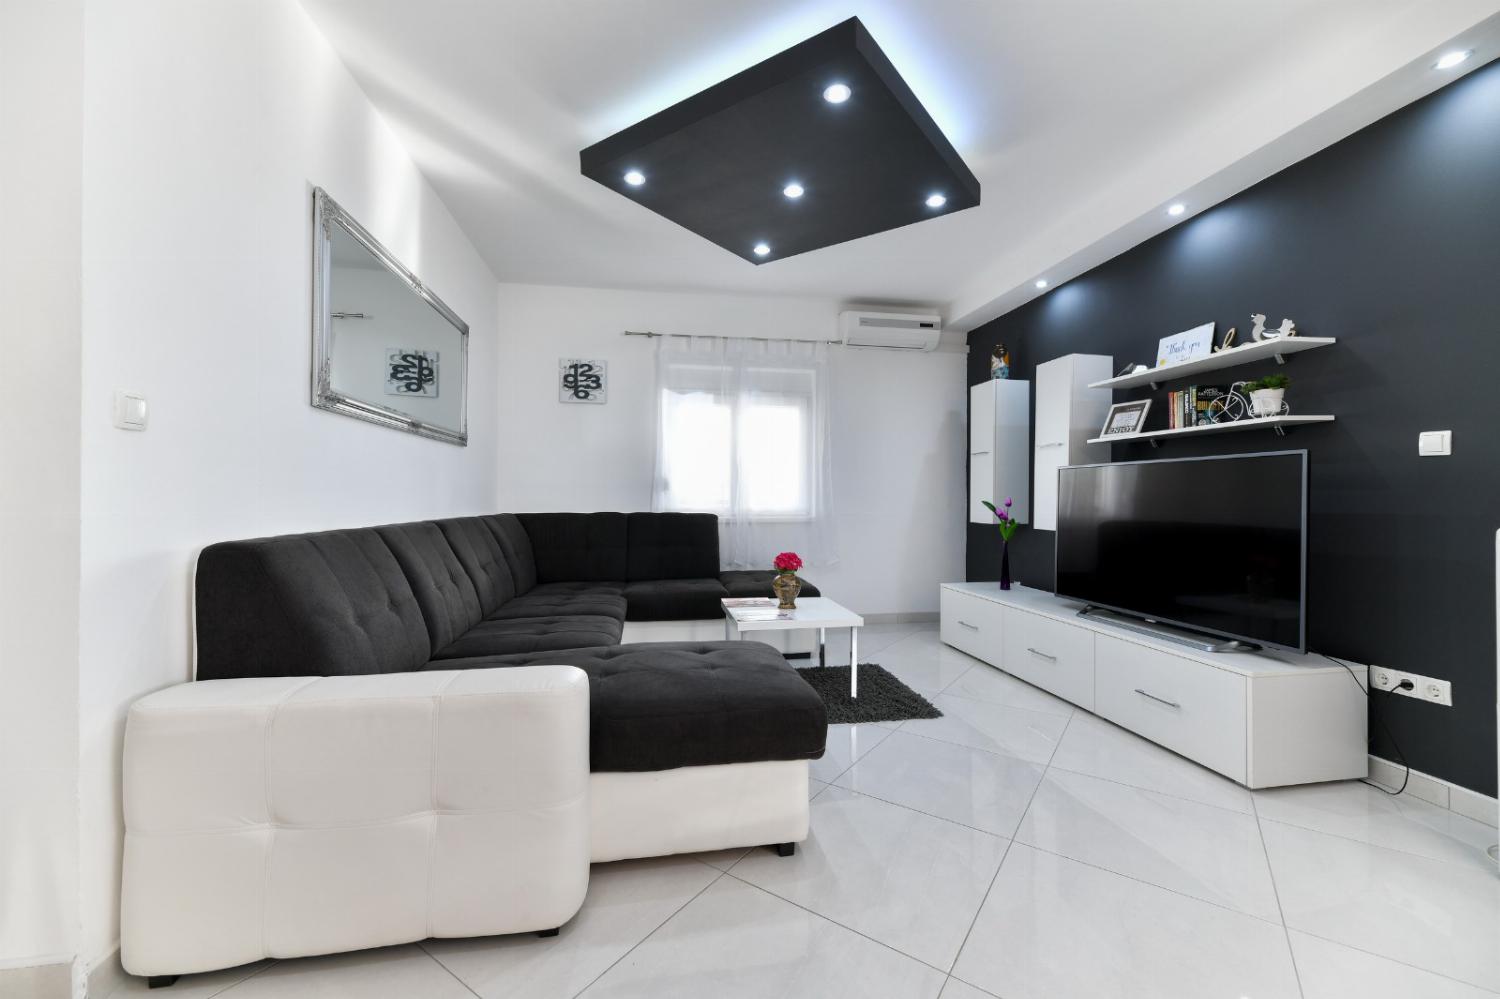 Living room with comfortable sofa